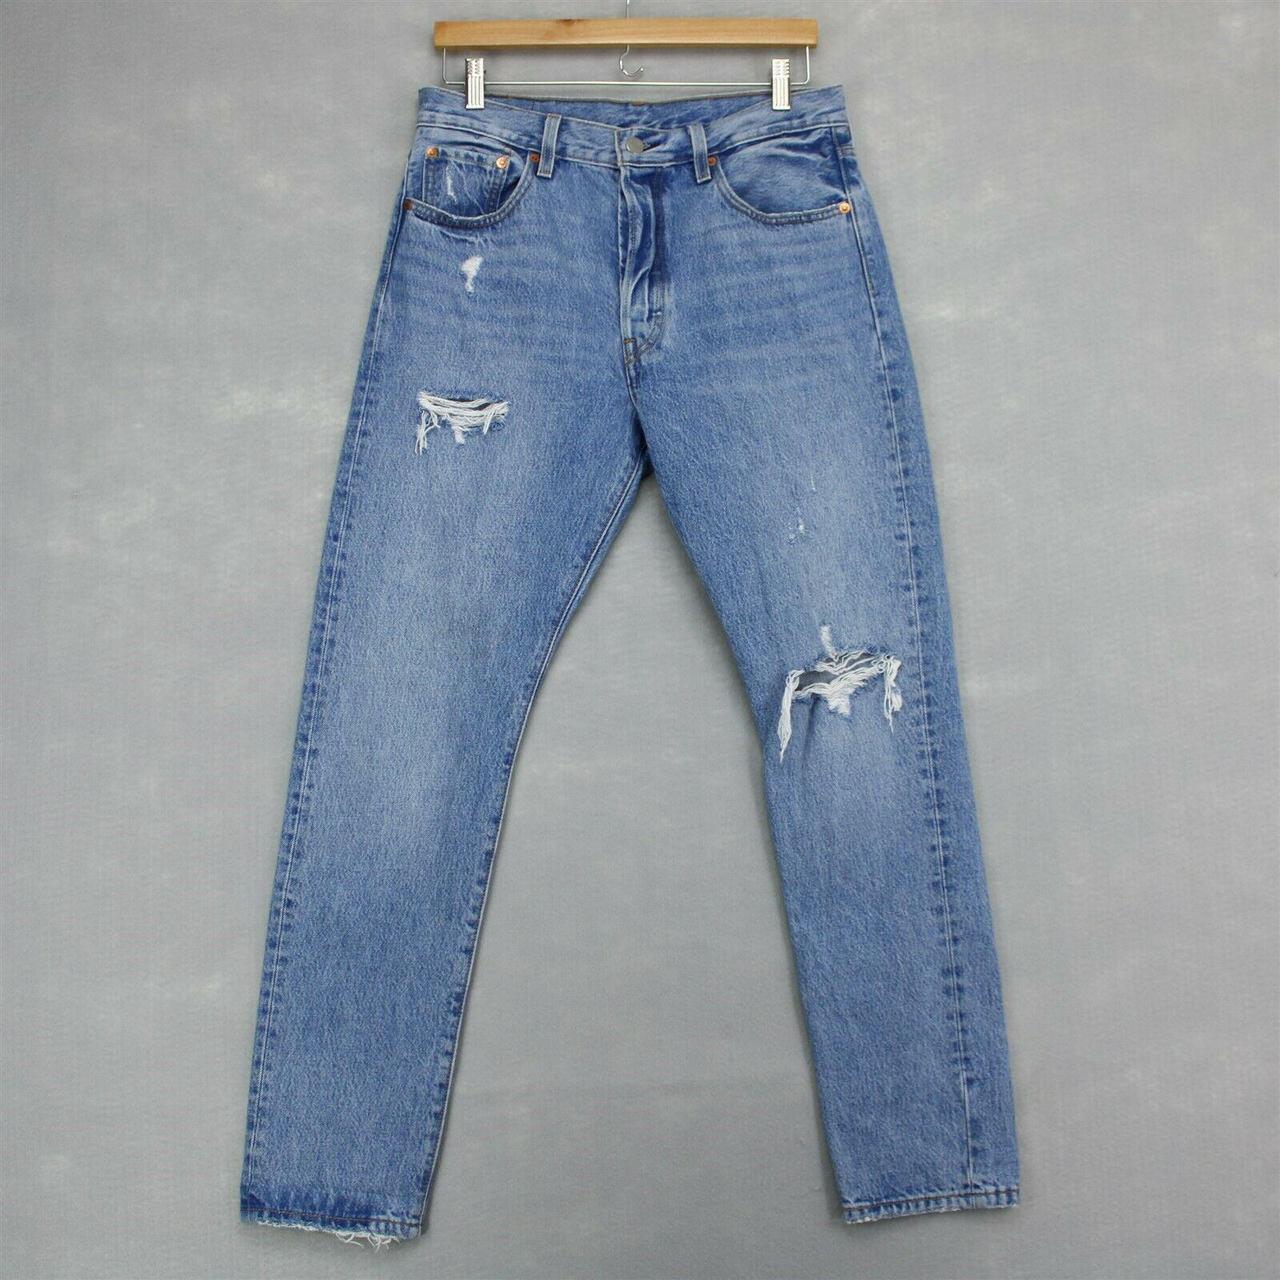 Levis 501 S Skinny Jeans Womens 29x30 Medium Wash... - Depop